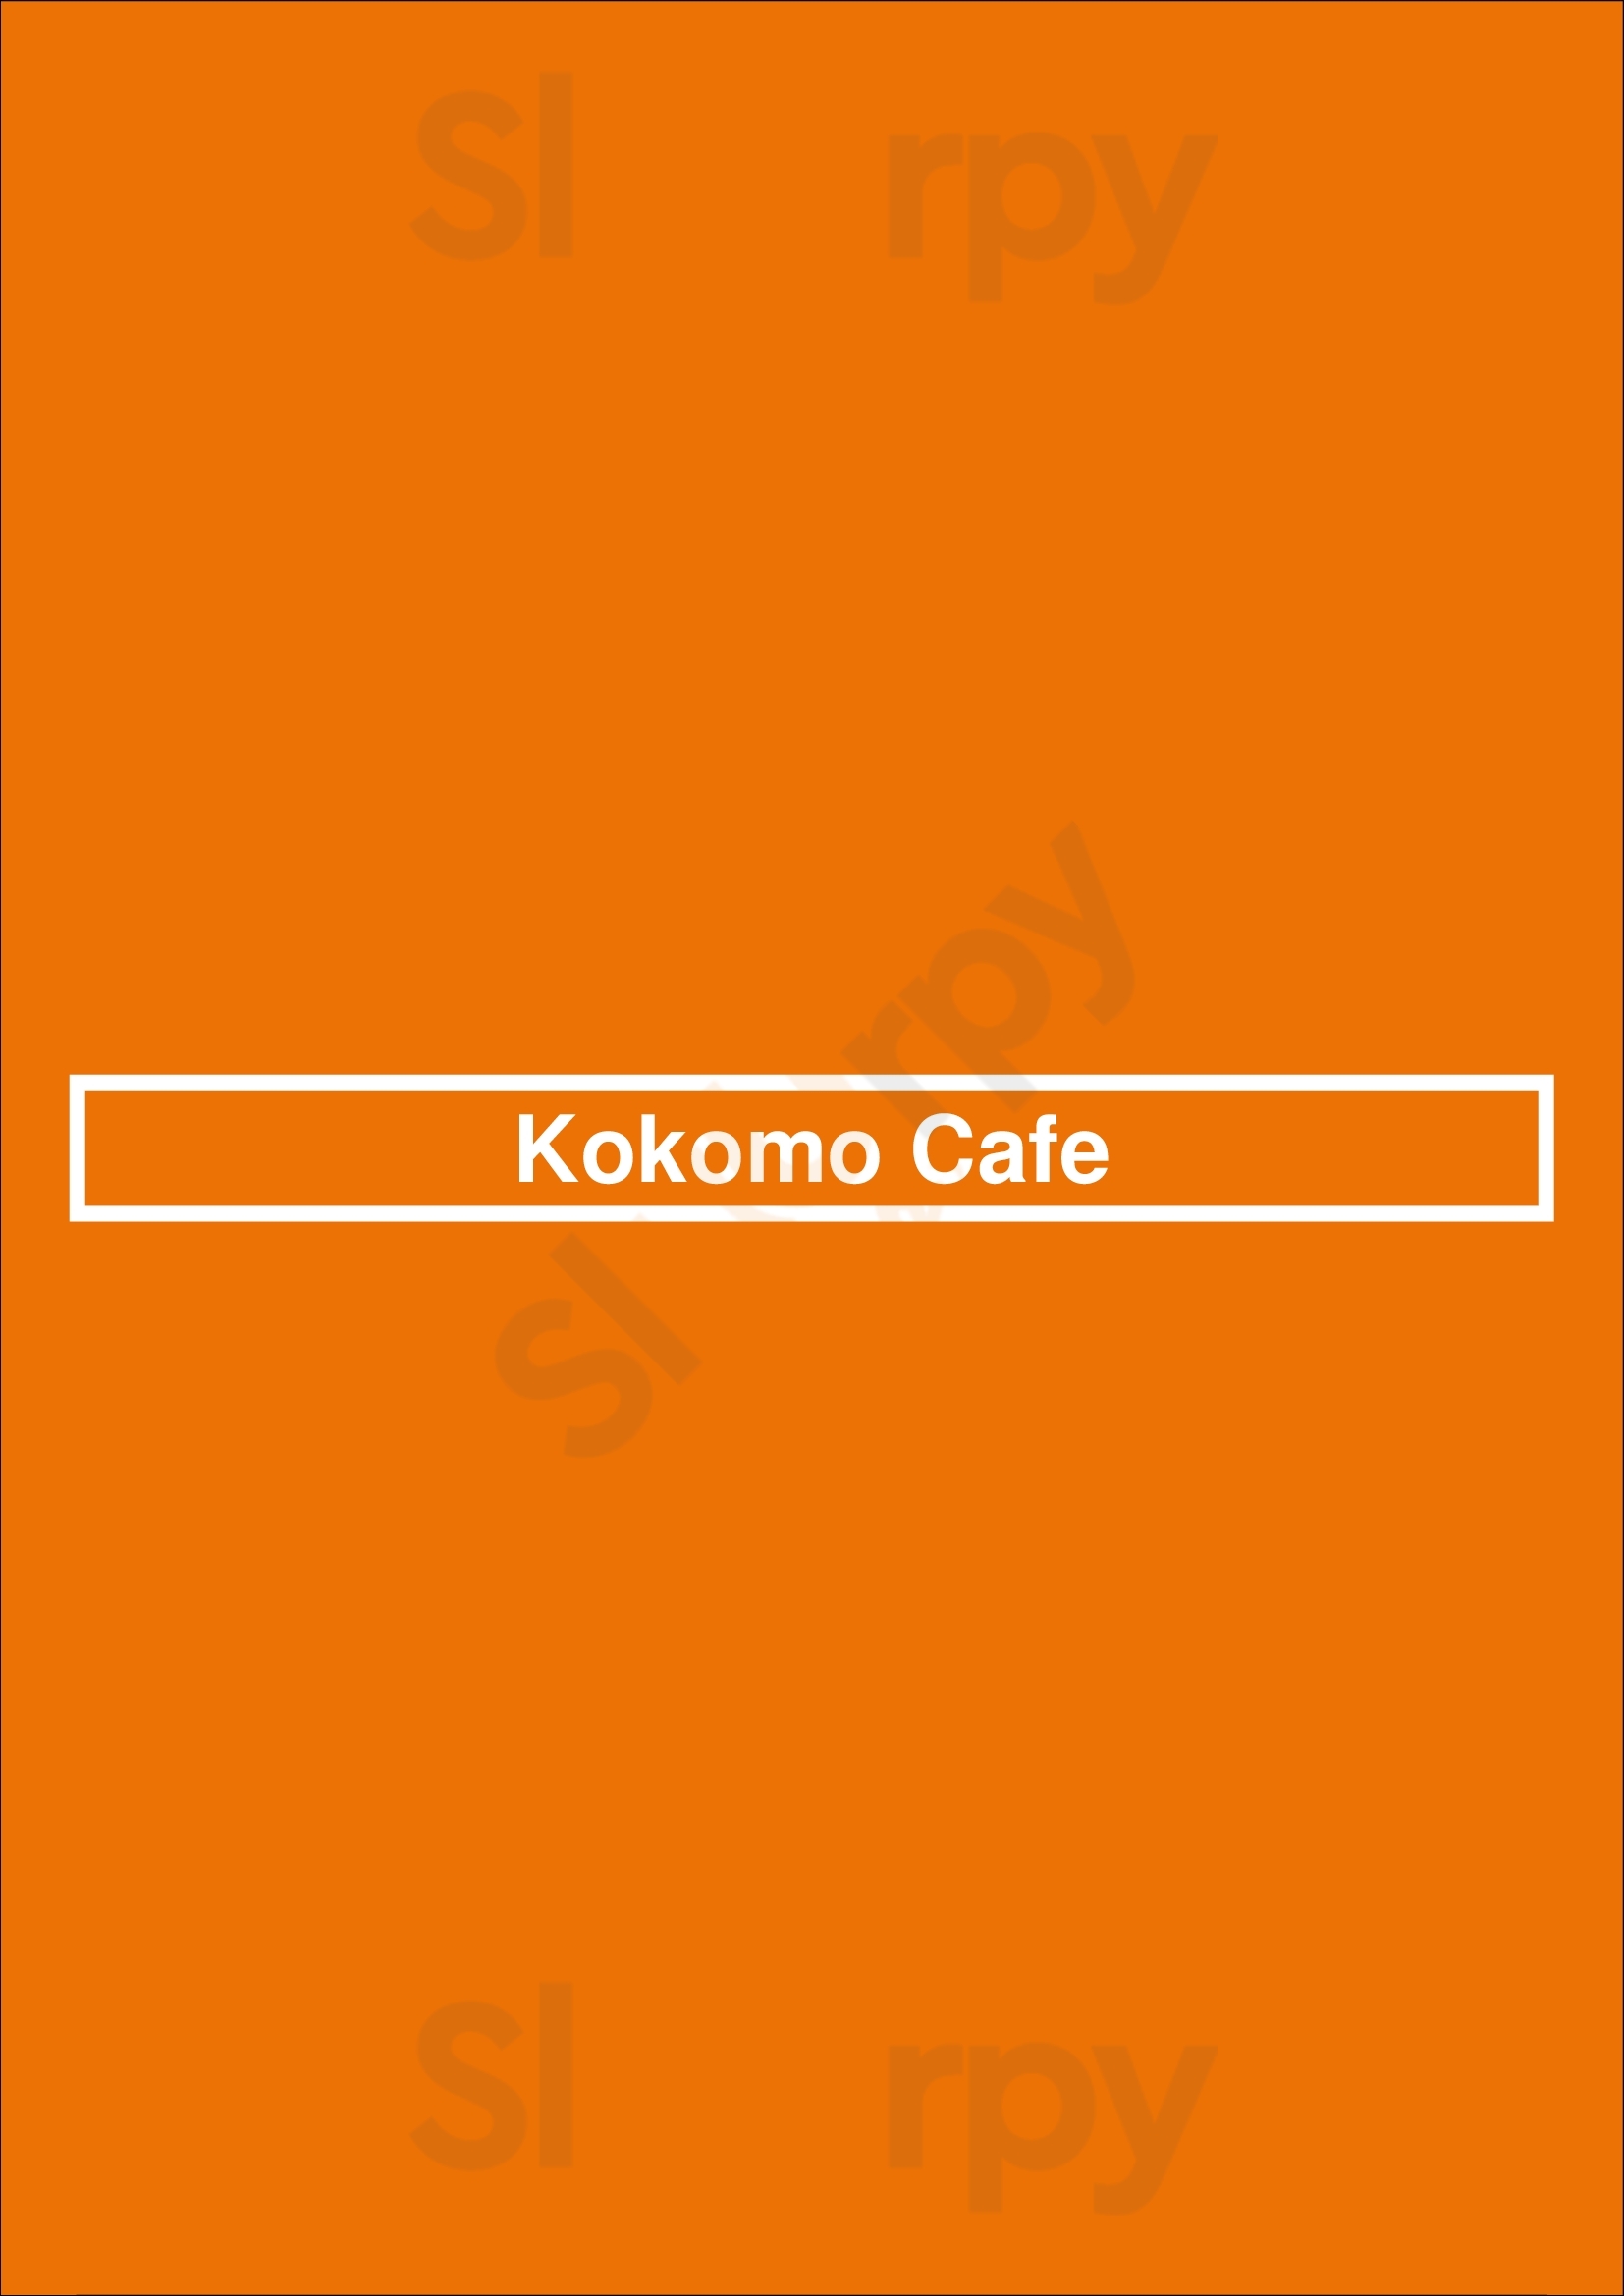 Kokomo Cafe Vancouver Menu - 1